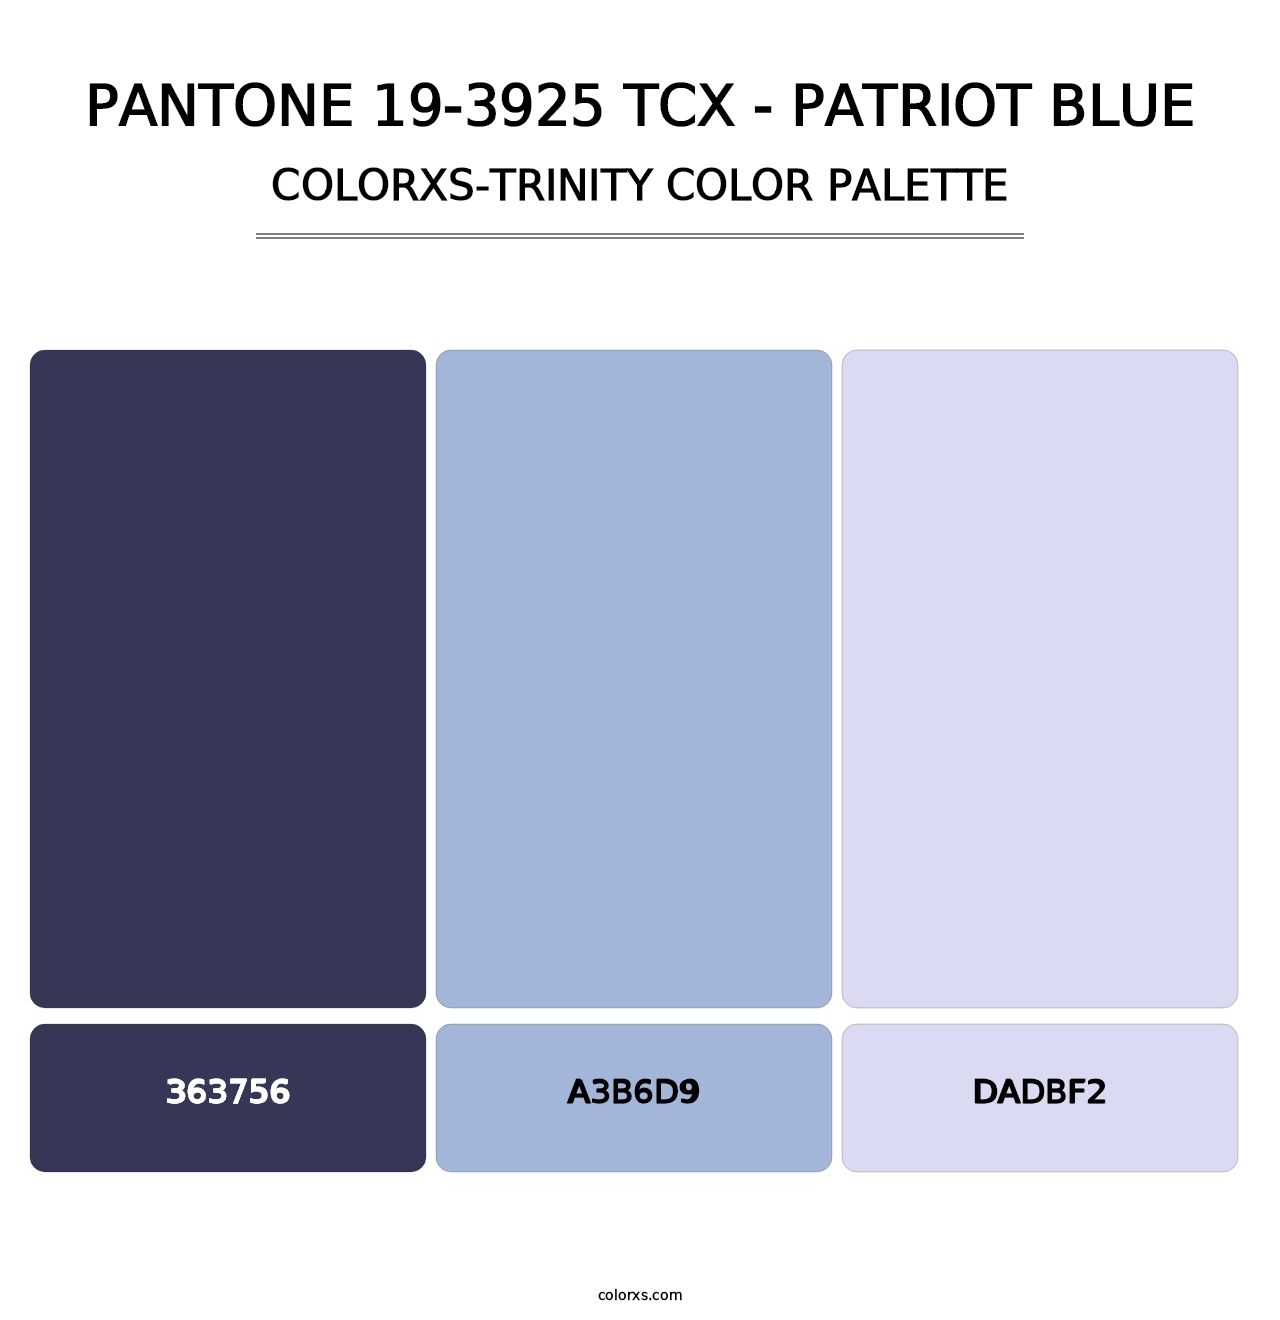 PANTONE 19-3925 TCX - Patriot Blue - Colorxs Trinity Palette